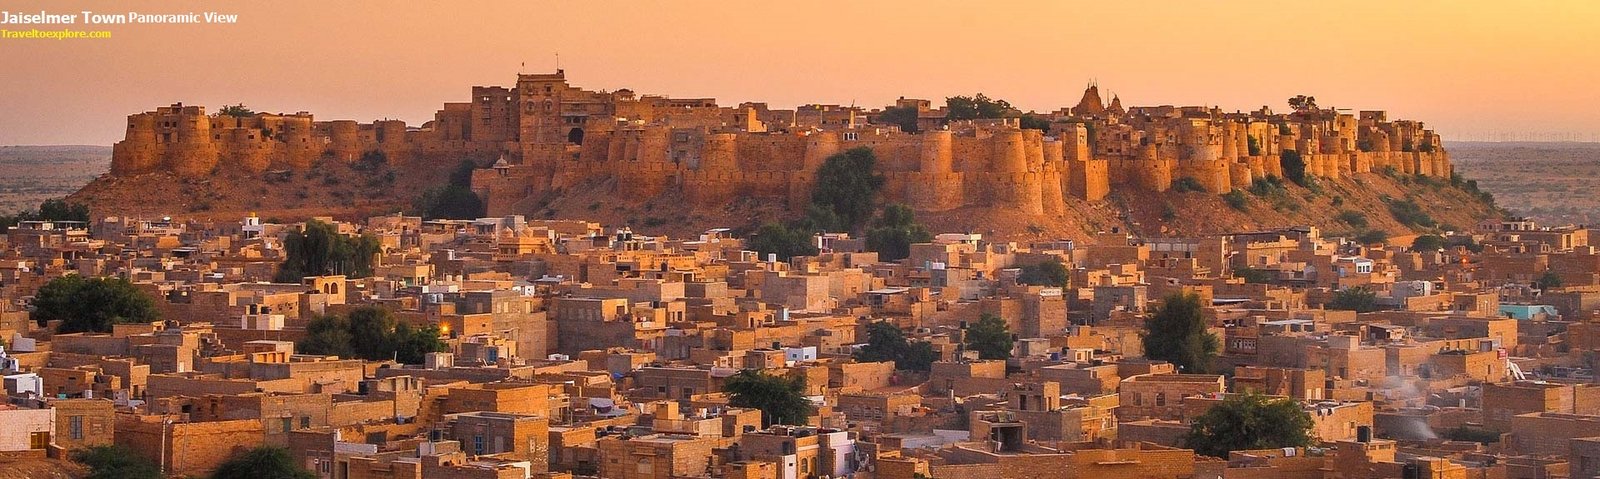 Traveltoexplore Jaisalmer Package